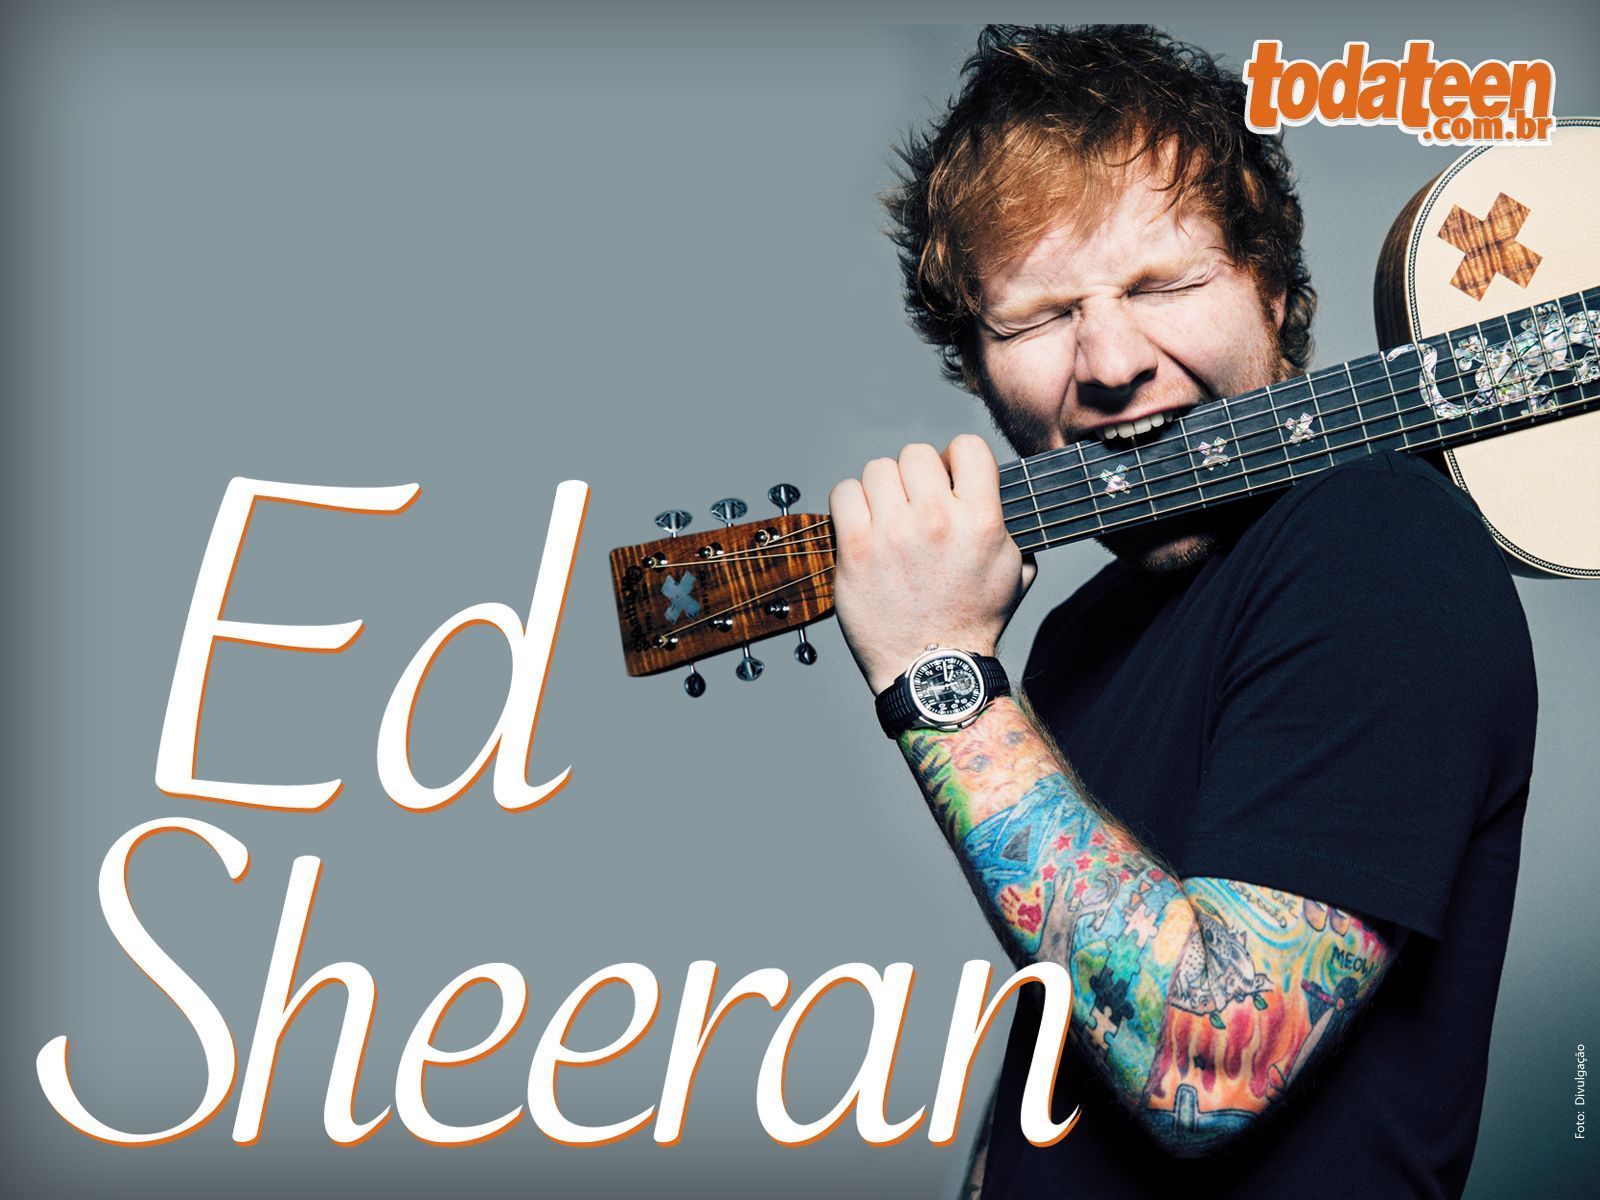 Ed Sheeran - Revista Todateen